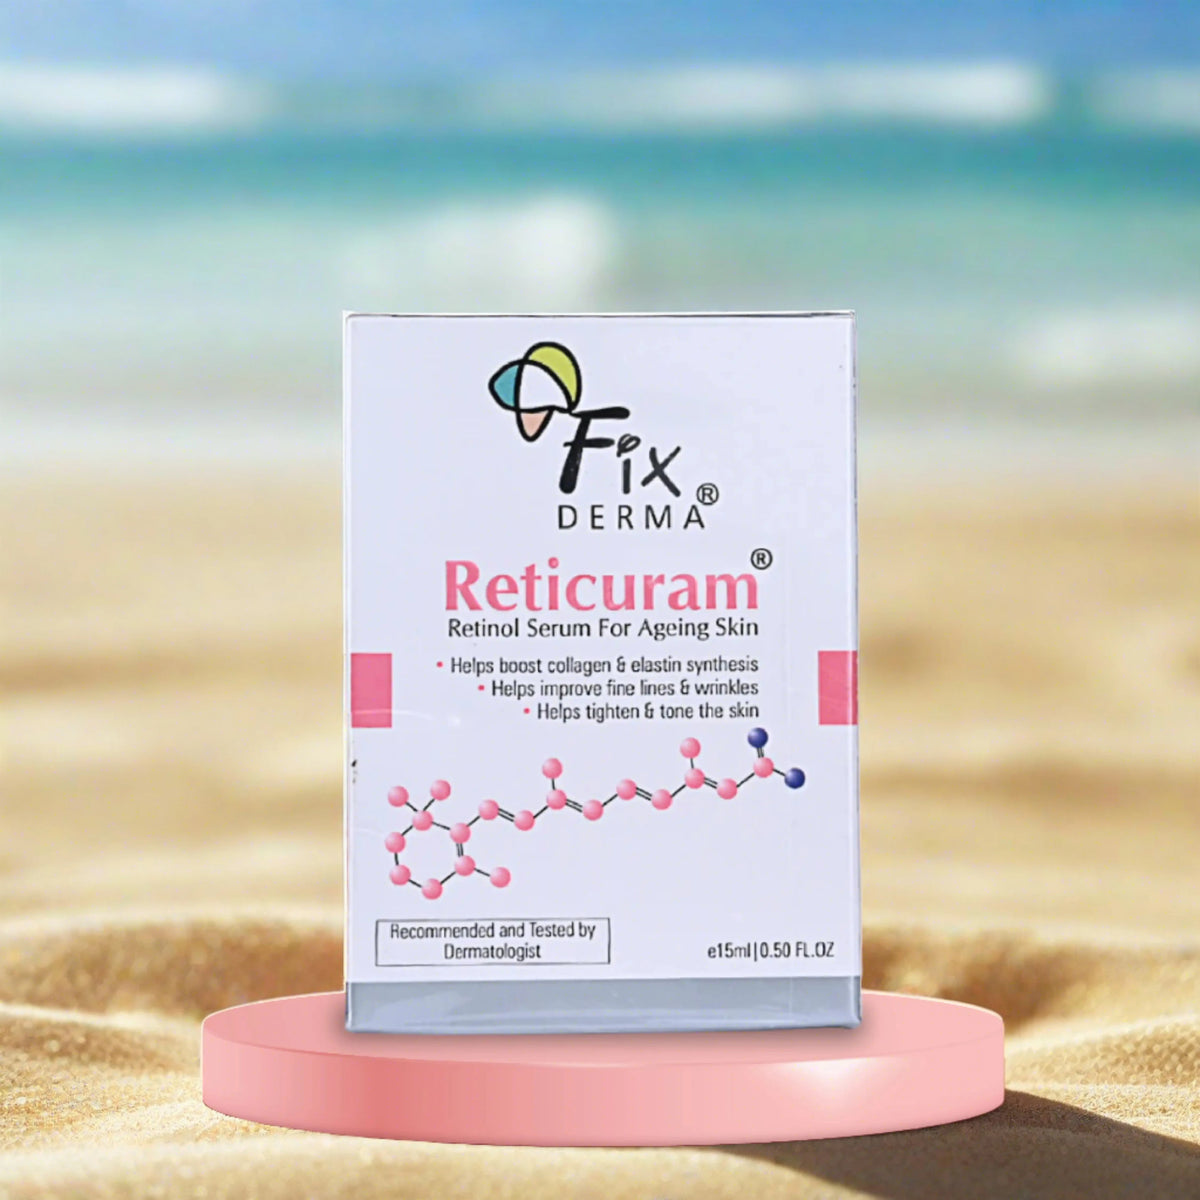 Fixderma Reticuram Serum for Ageing Skin